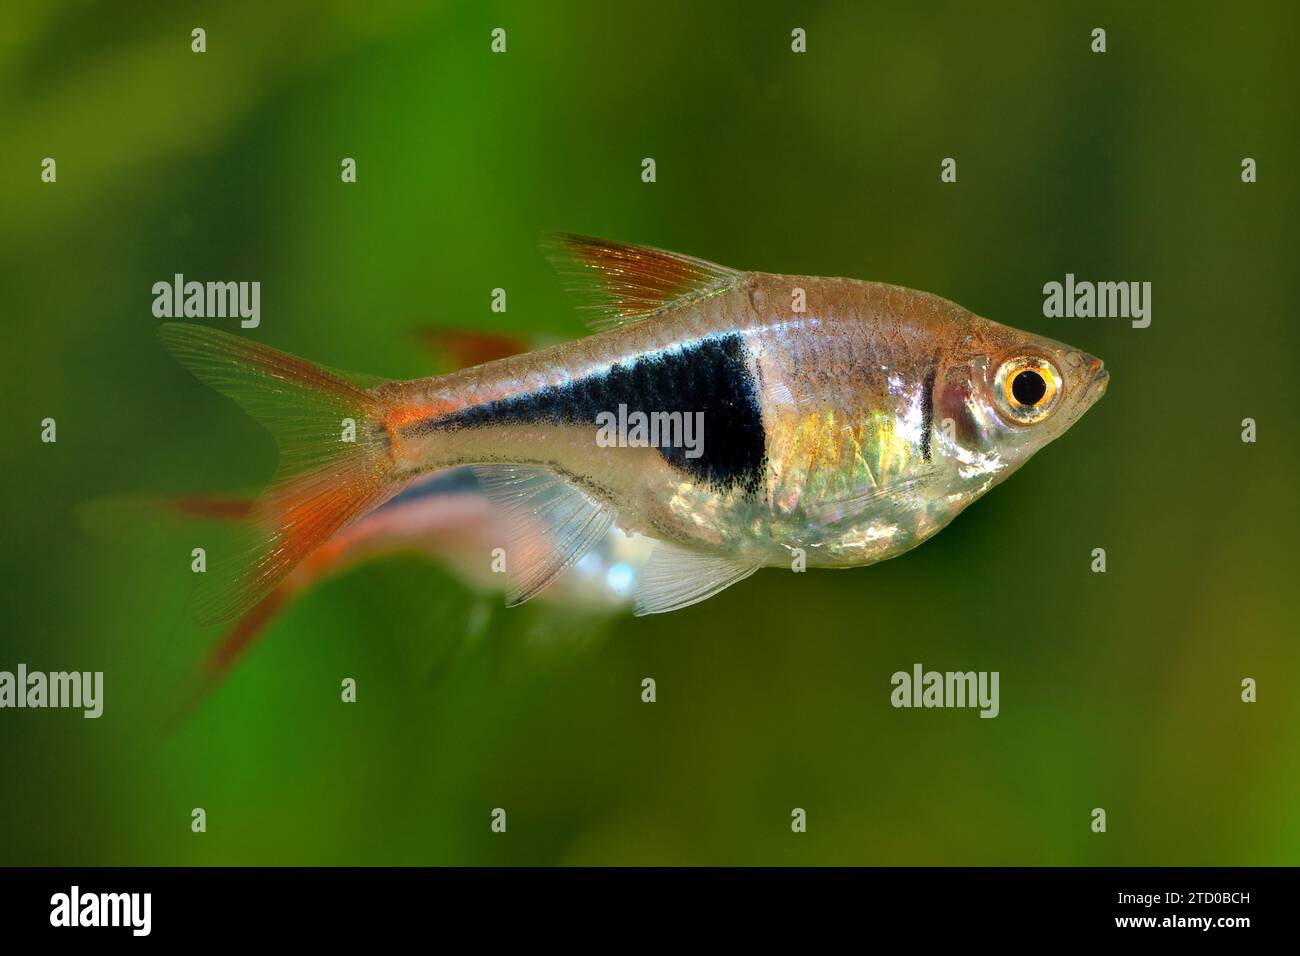 Harlequin Rasbora, Harlequin fish (Trigonostigma heteromorpha, Rasbora heteromorpha), side view Stock Photo